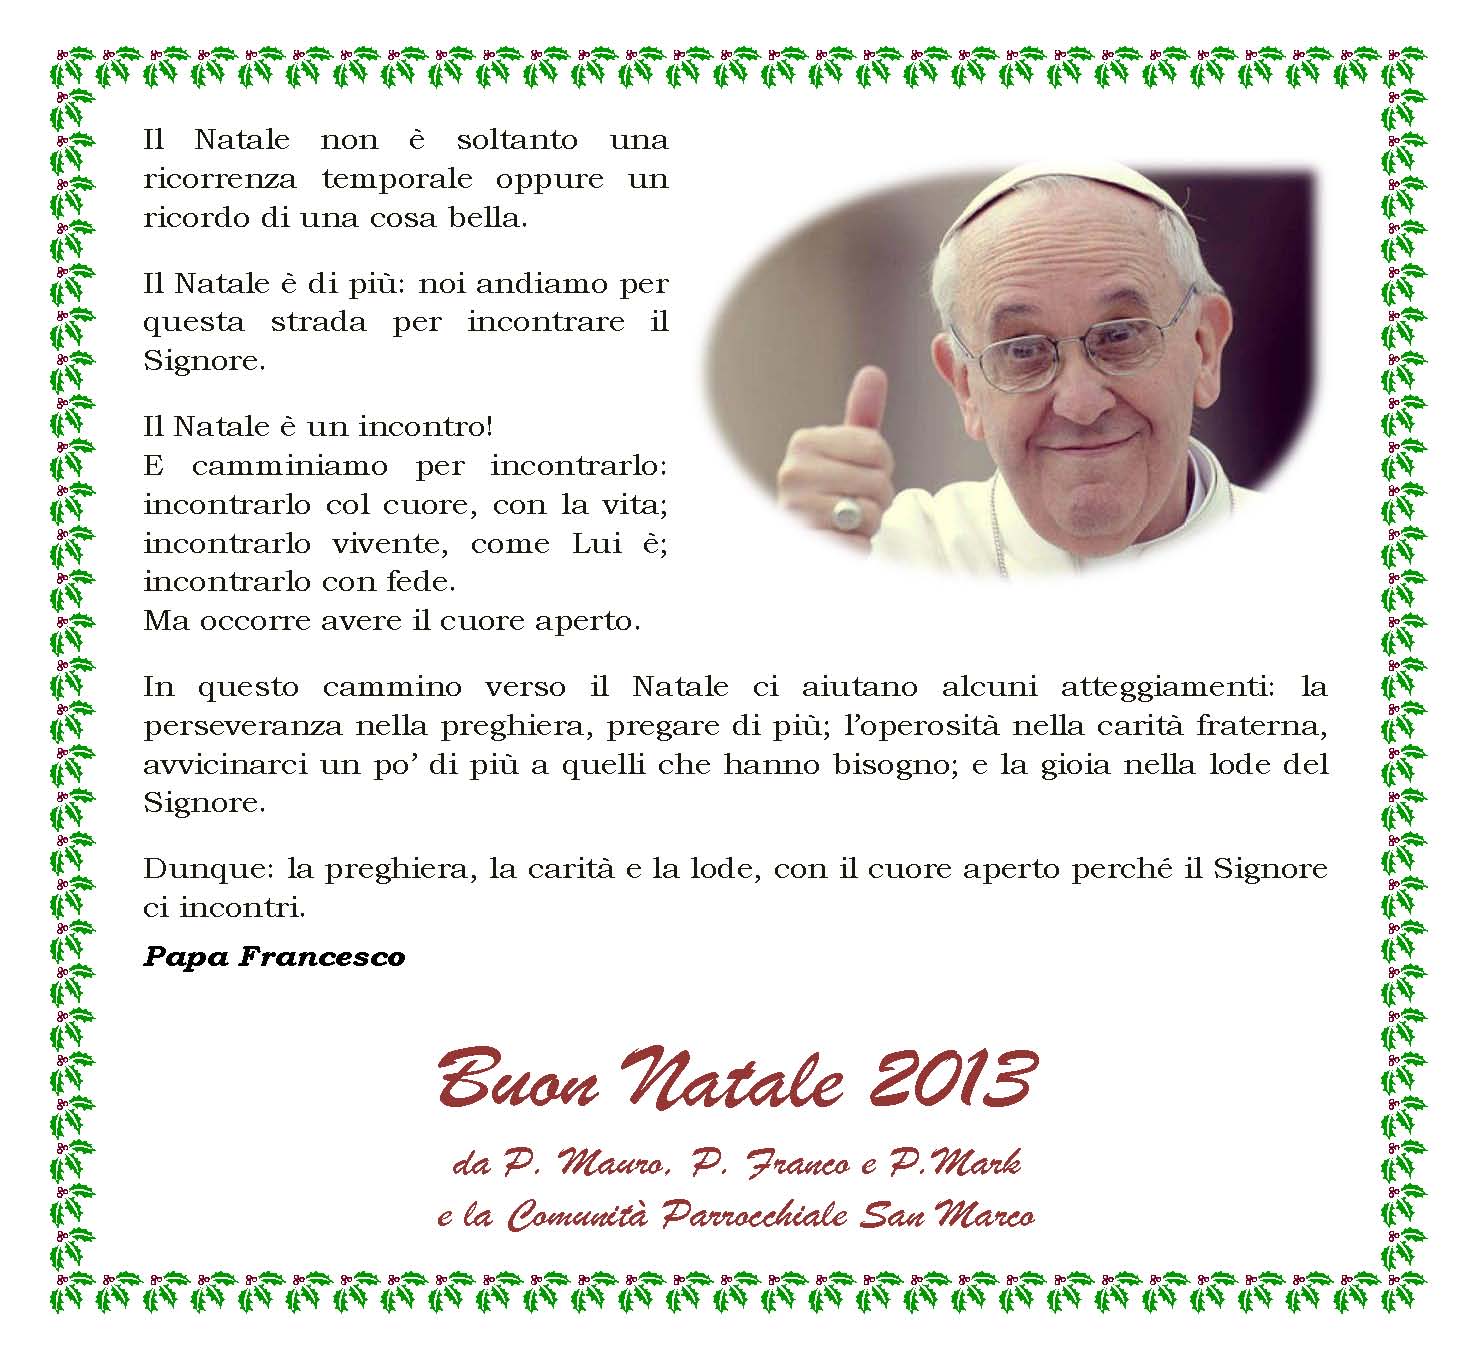 Auguri Buon Natale Papa Francesco.Buon Natale Parrocchia San Marco Evangelista